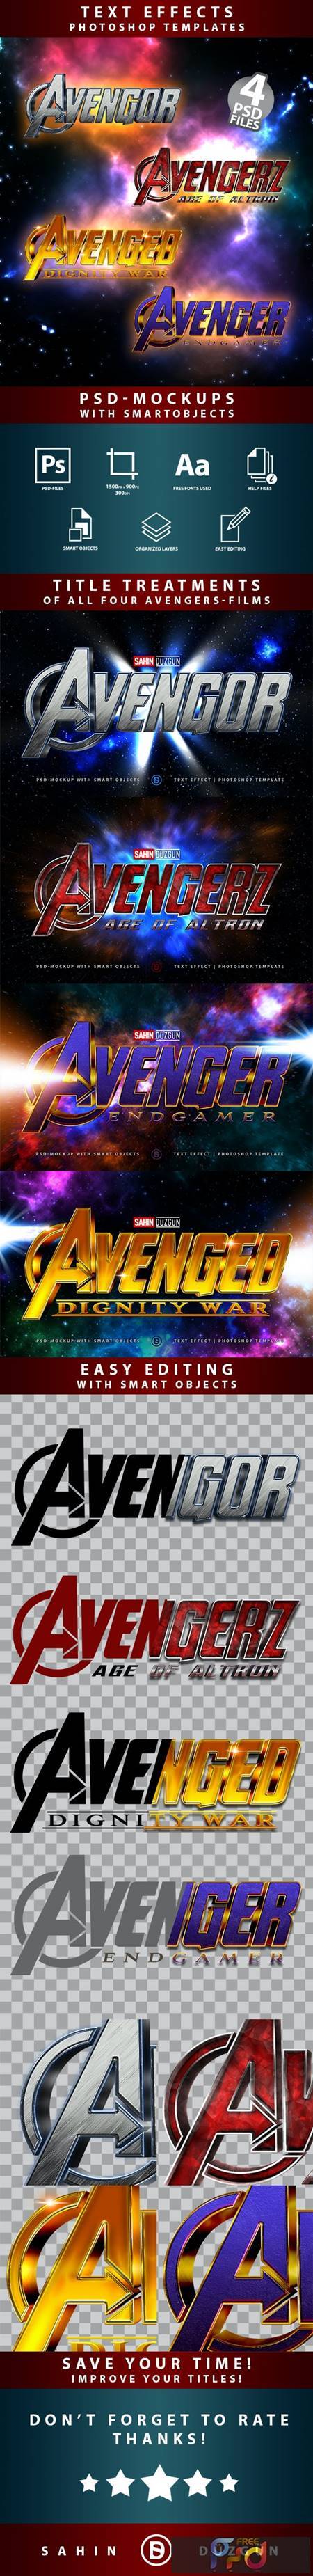 avengers font photoshop